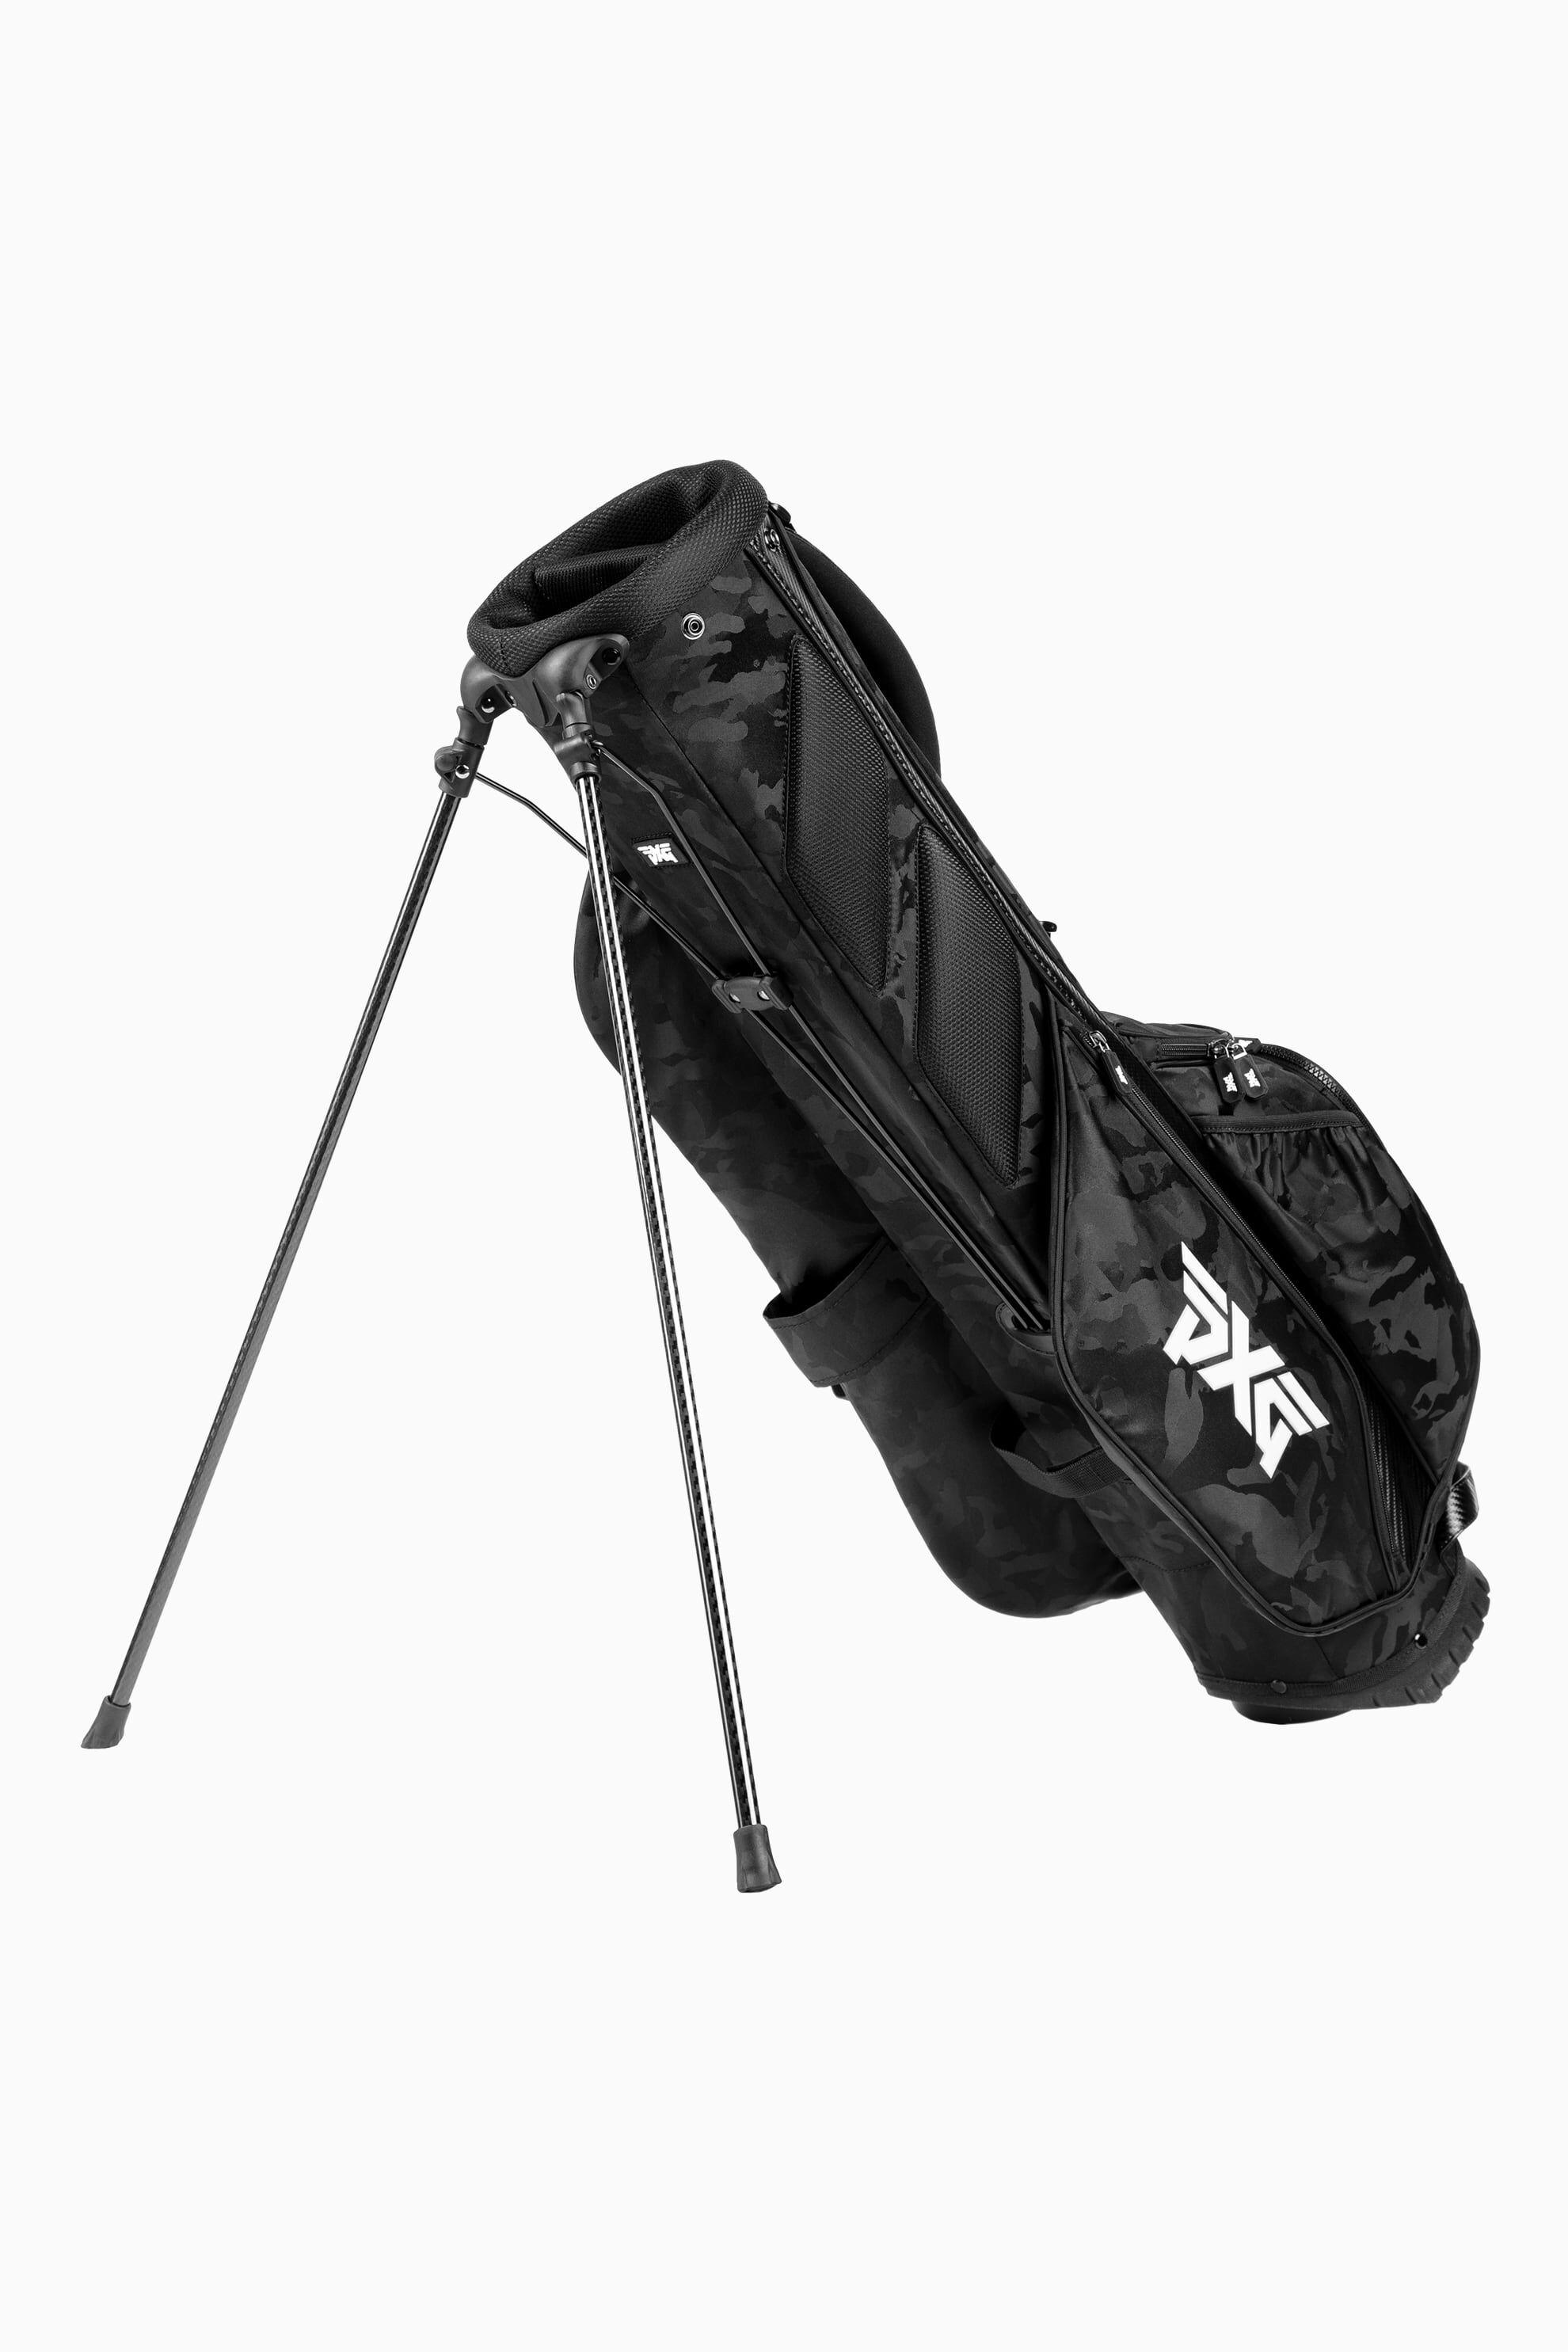 JACQUARD WOVEN FAIRWAY CAMO™ SUNDAY STAND BAG | Golf Bags